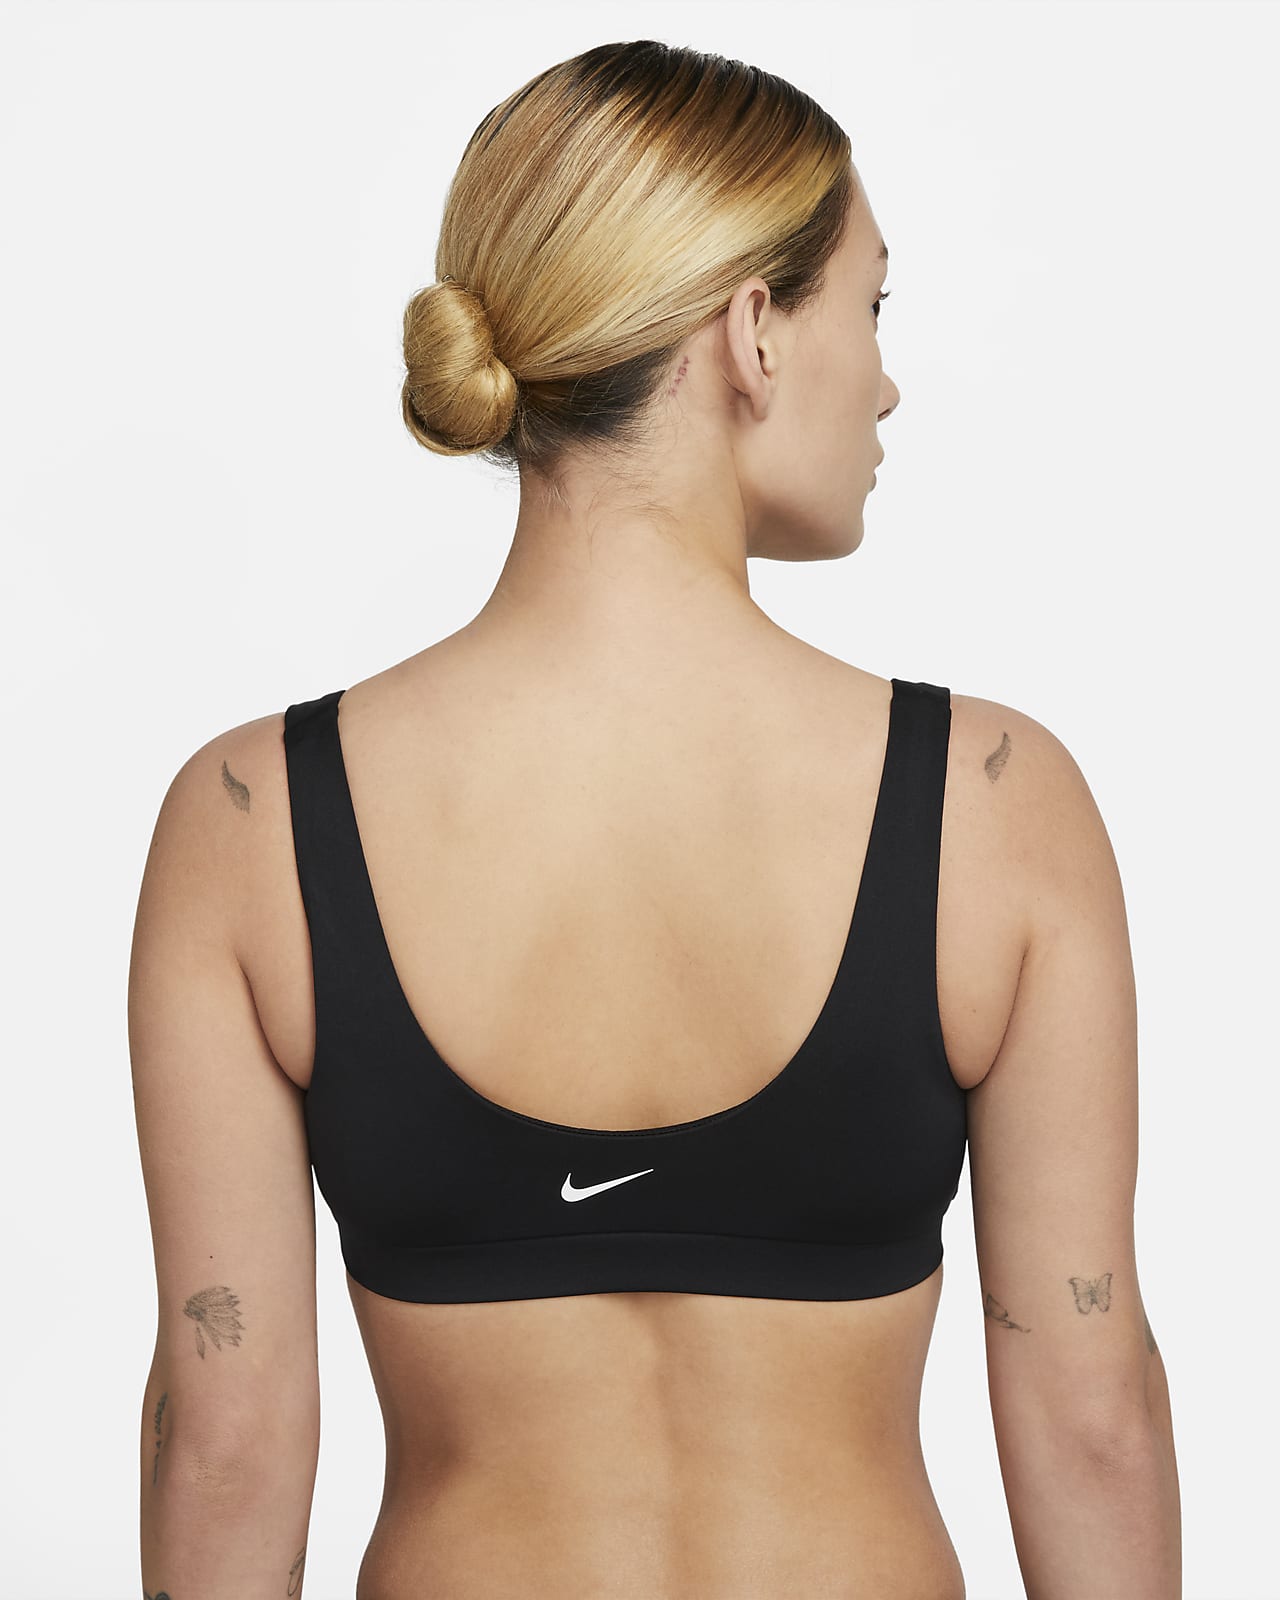 Extraer asistente Turbulencia Nike Women's Scoop-Neck Bikini Swim Top. Nike.com